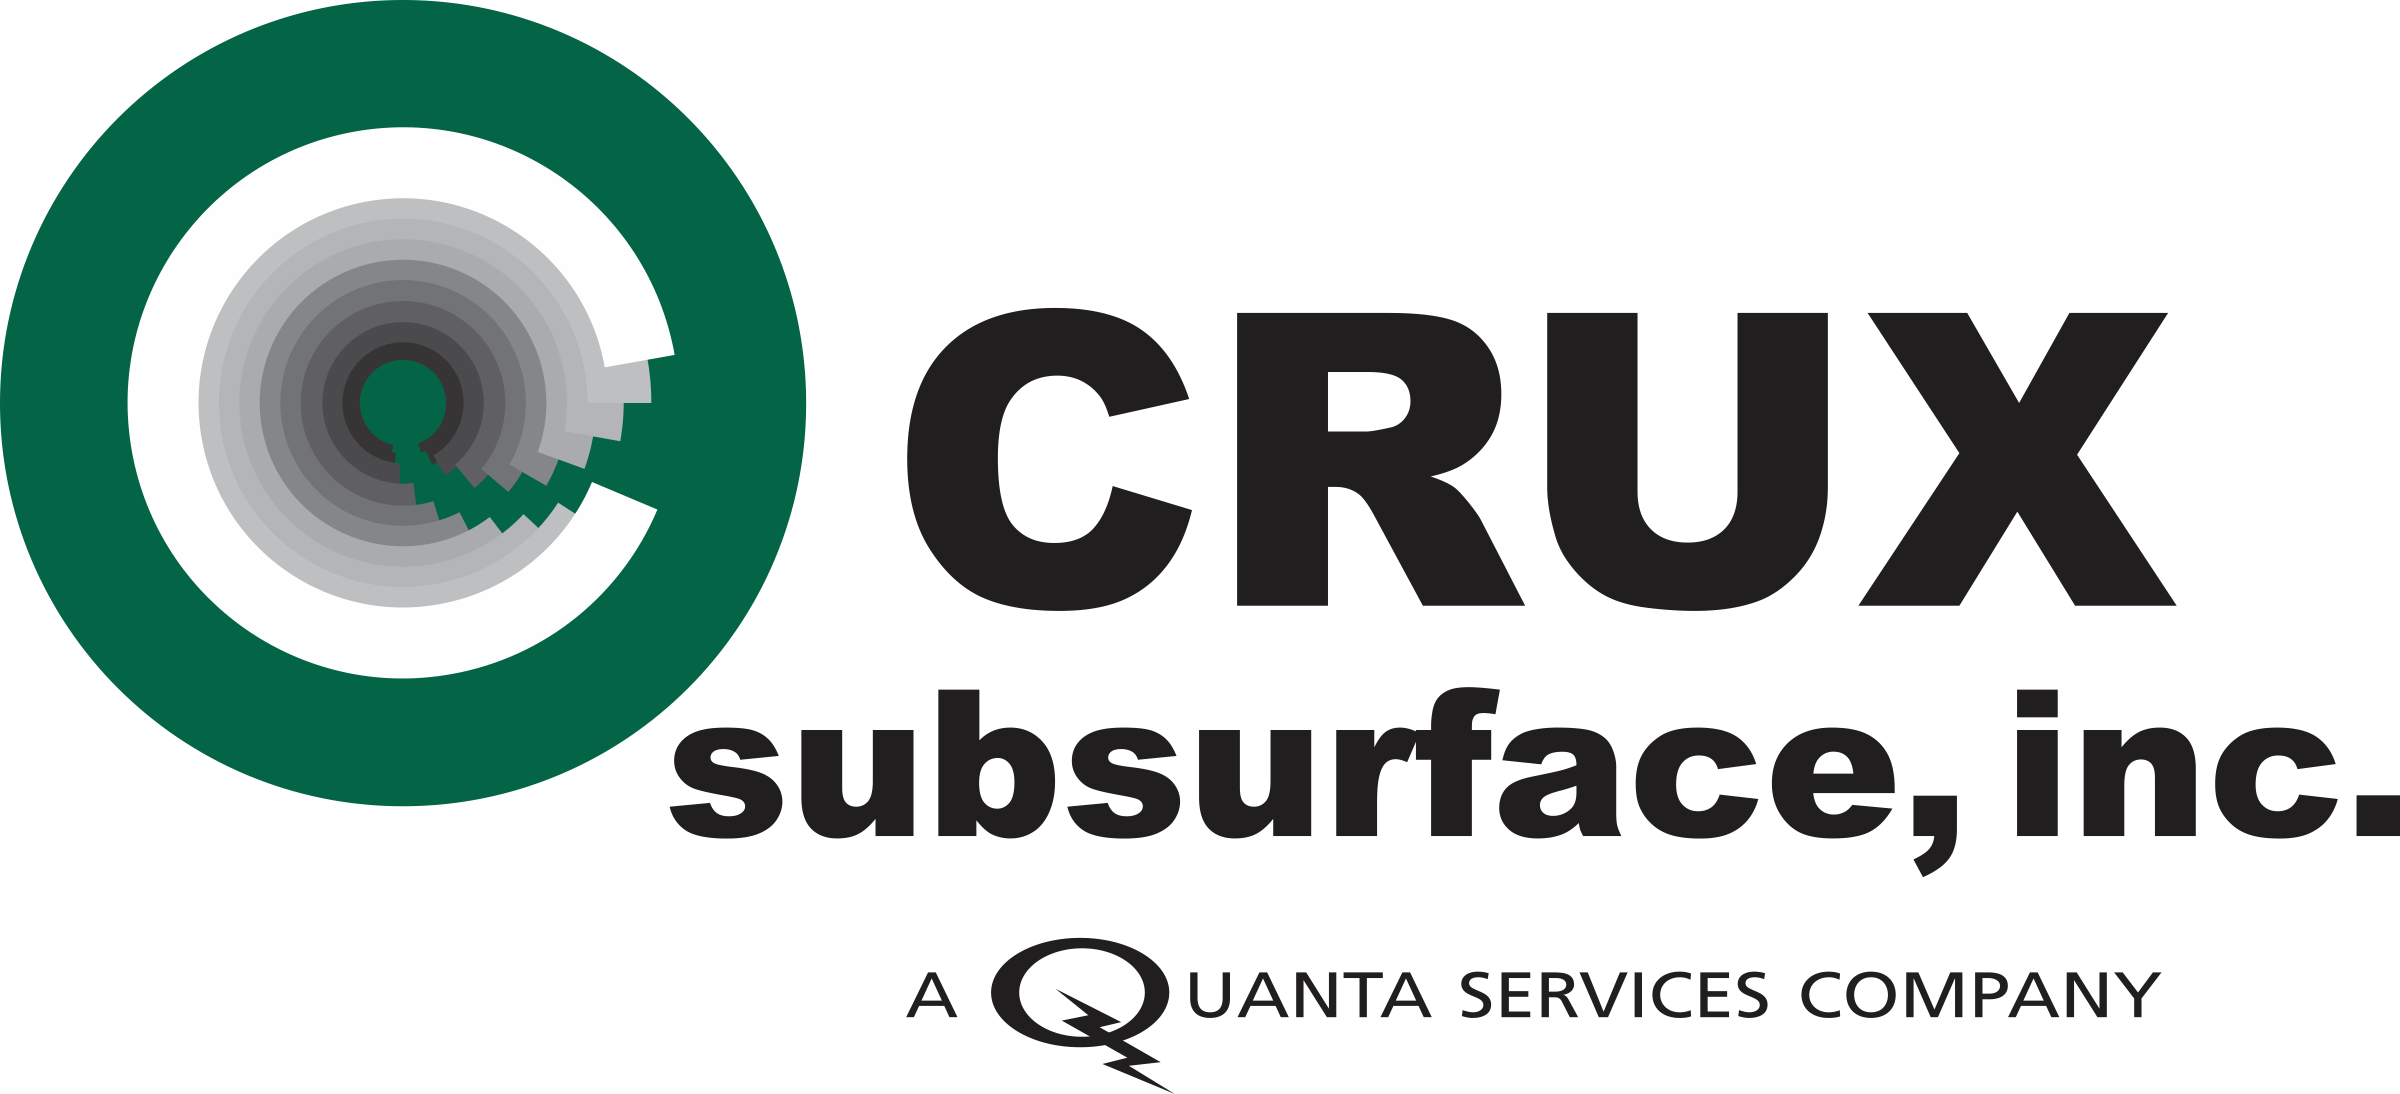 Quanta Logo - Crux acquired